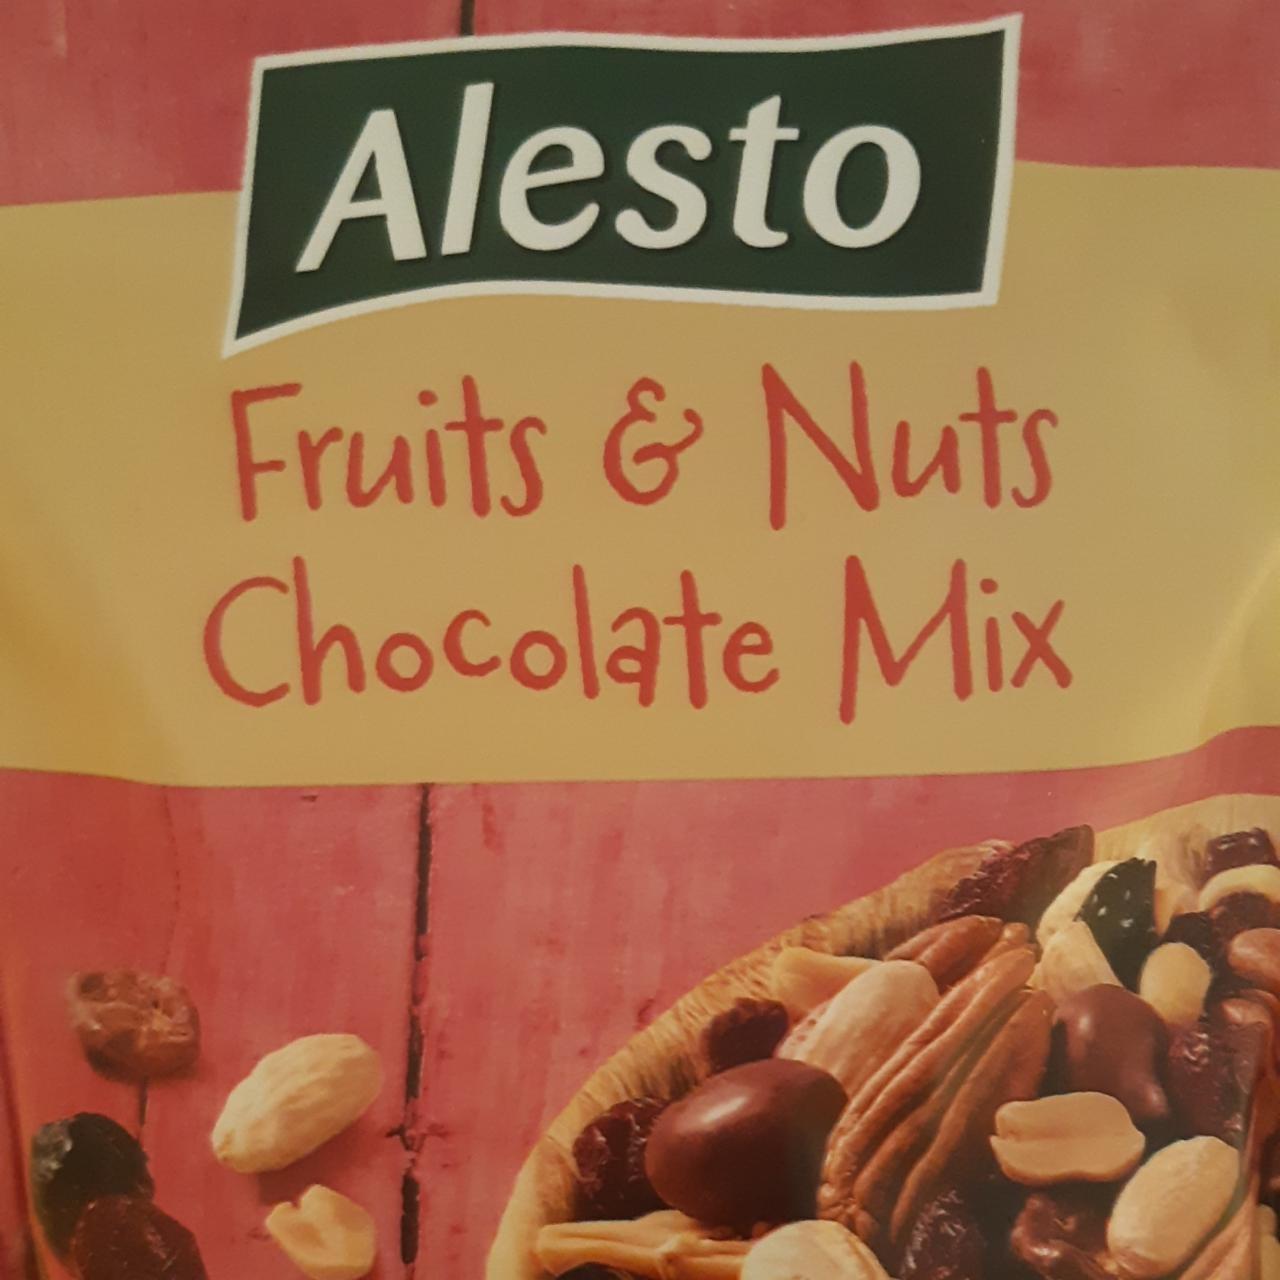 Képek - Fruit & Nuts Chocolate Mix Alesto